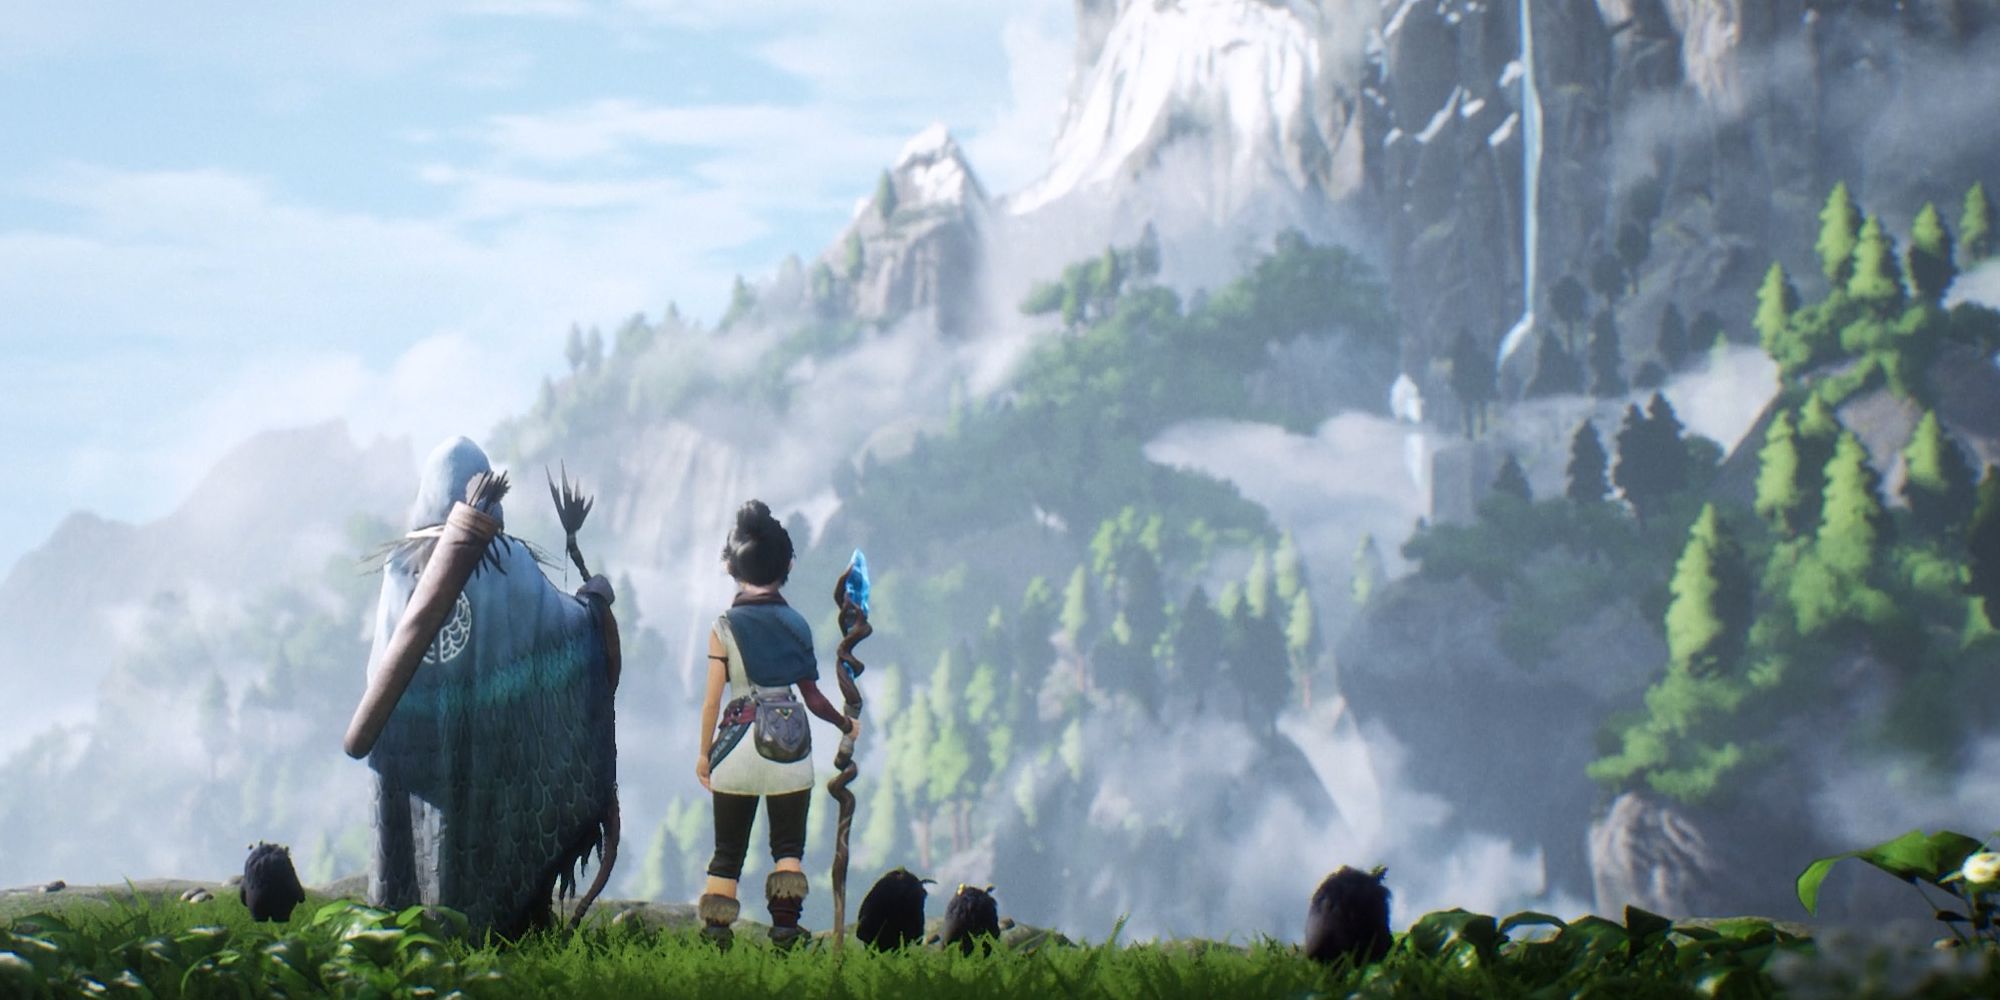 A cutscene still shows the beautiful scenery of the world of Kena: Bridge of Spirits.